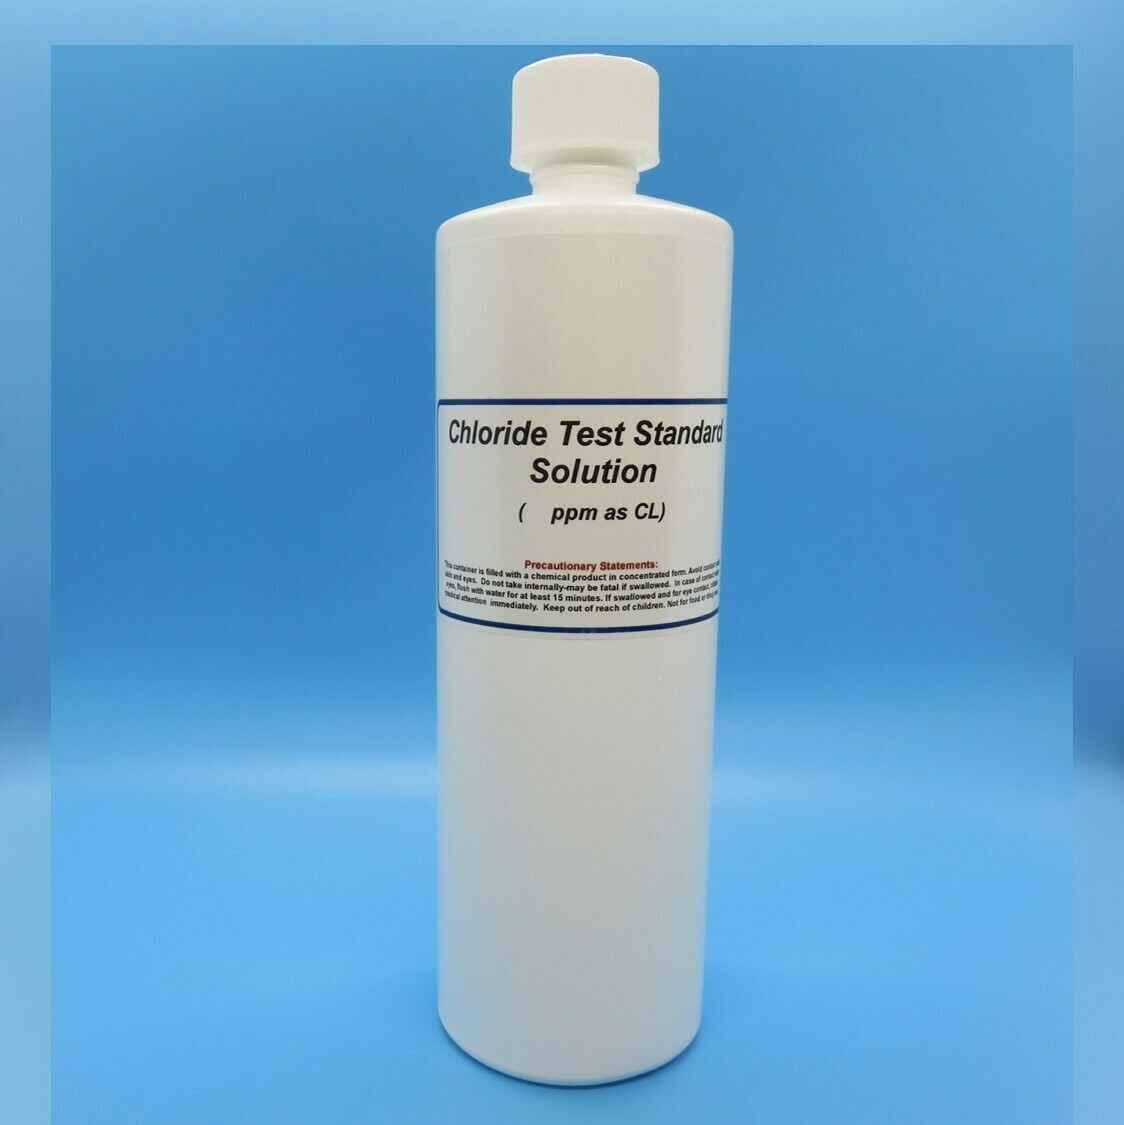 Chloride Test Standard Solution